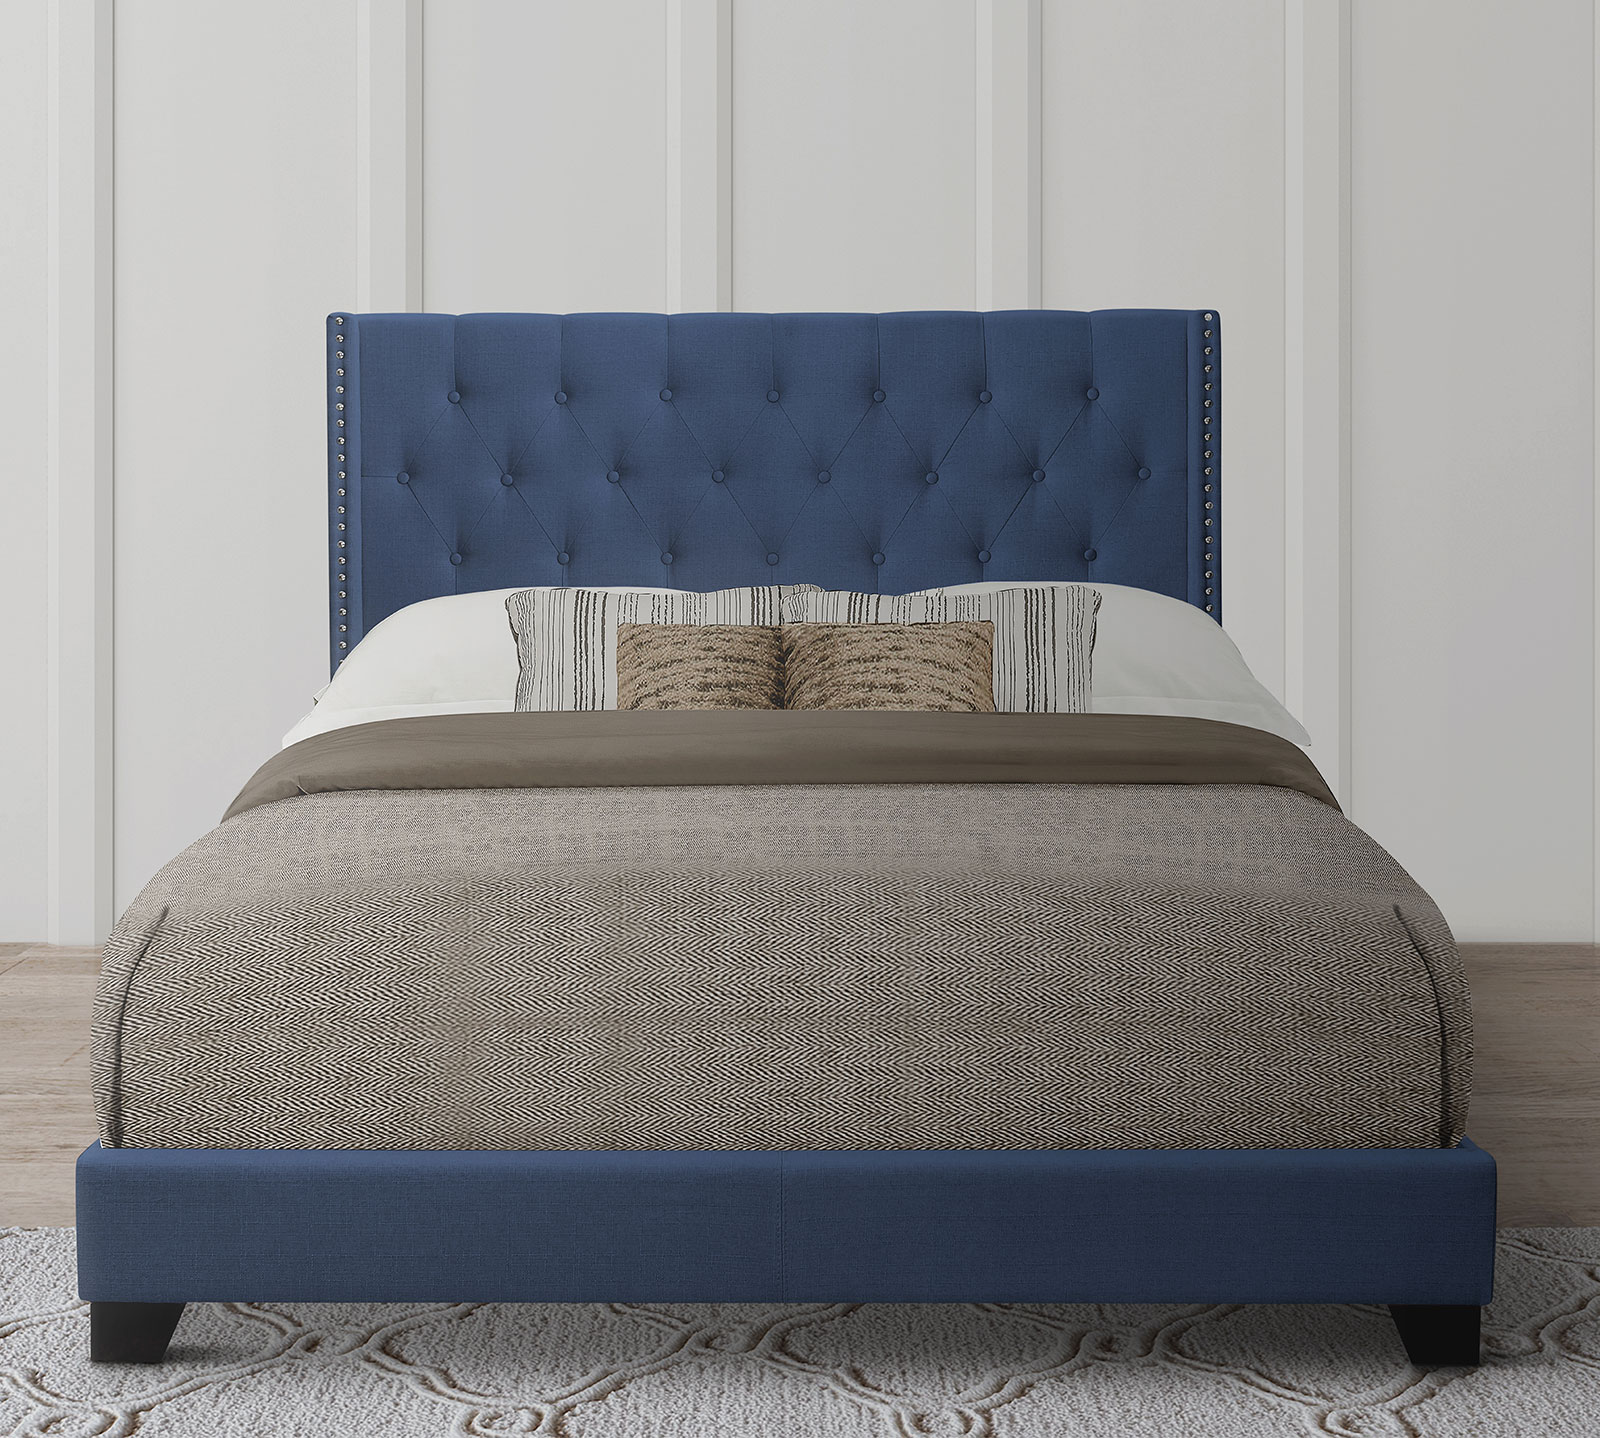 Homelegance Upholstered Bed Set | King | Avery Bed Frame & Headboard | Blue